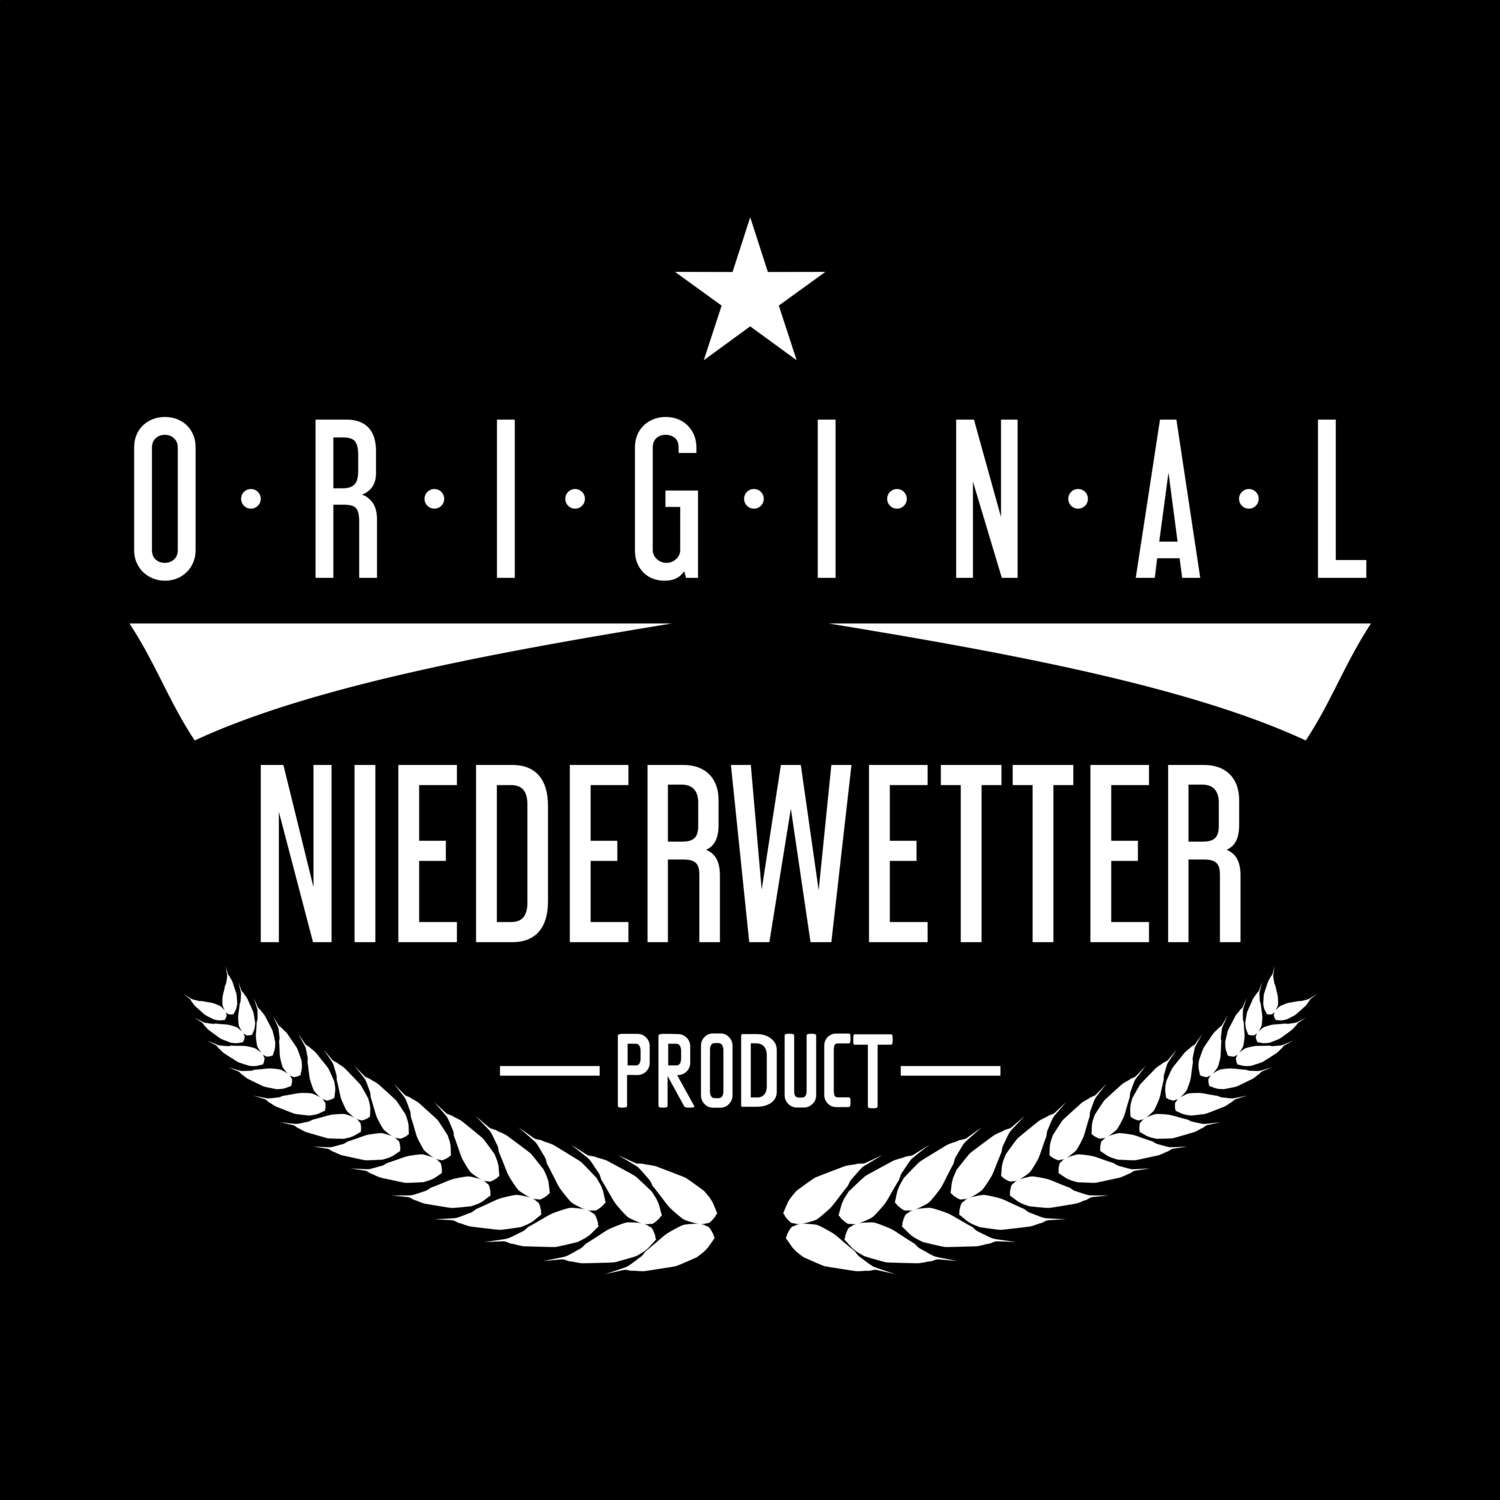 Niederwetter T-Shirt »Original Product«